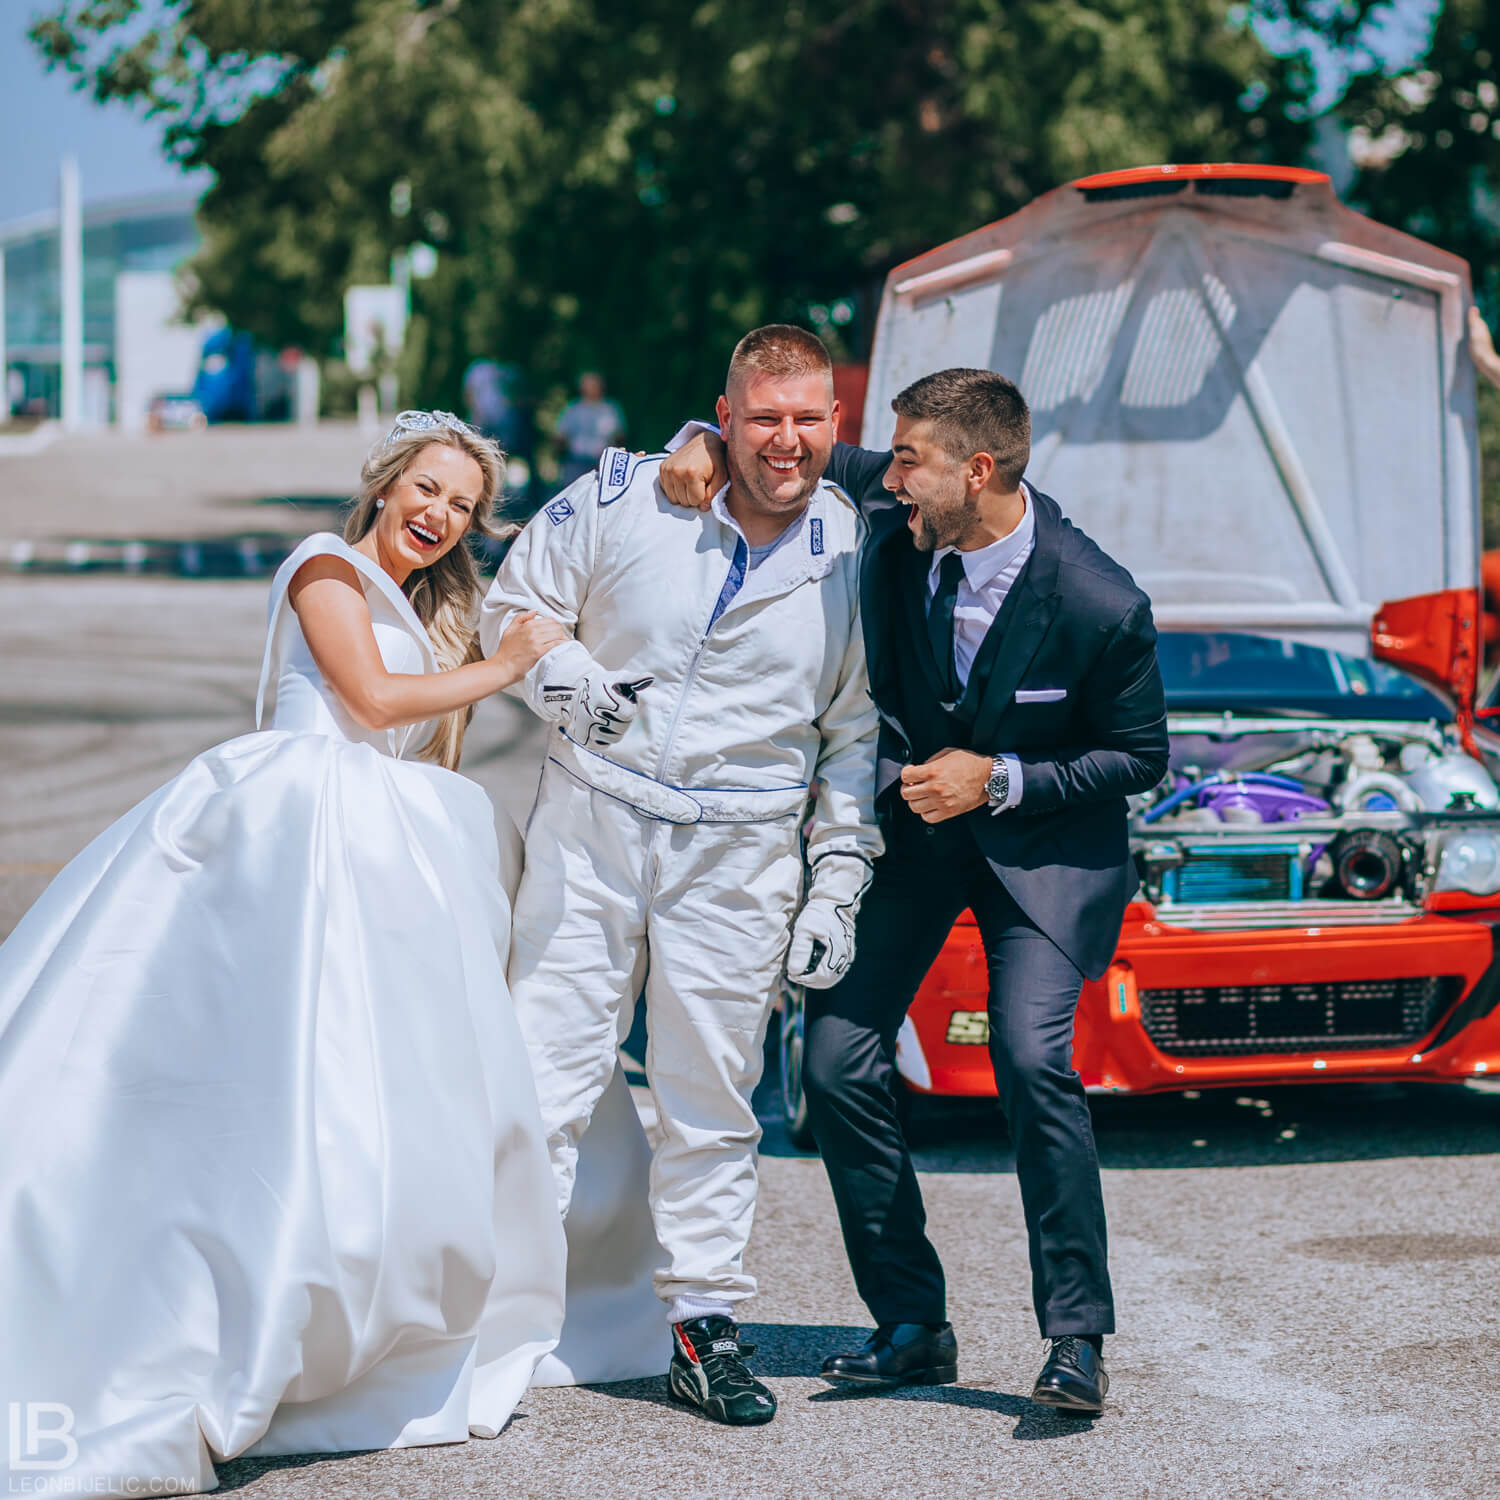 WEDDING BELGRADE - TIJANA I MARKO - LEON BIJELIC PHOTOGRAPHY PHOTOGRAPHER - SERBIA - SRBIJA - BEOGRAD - DARKO GRUJOVIC